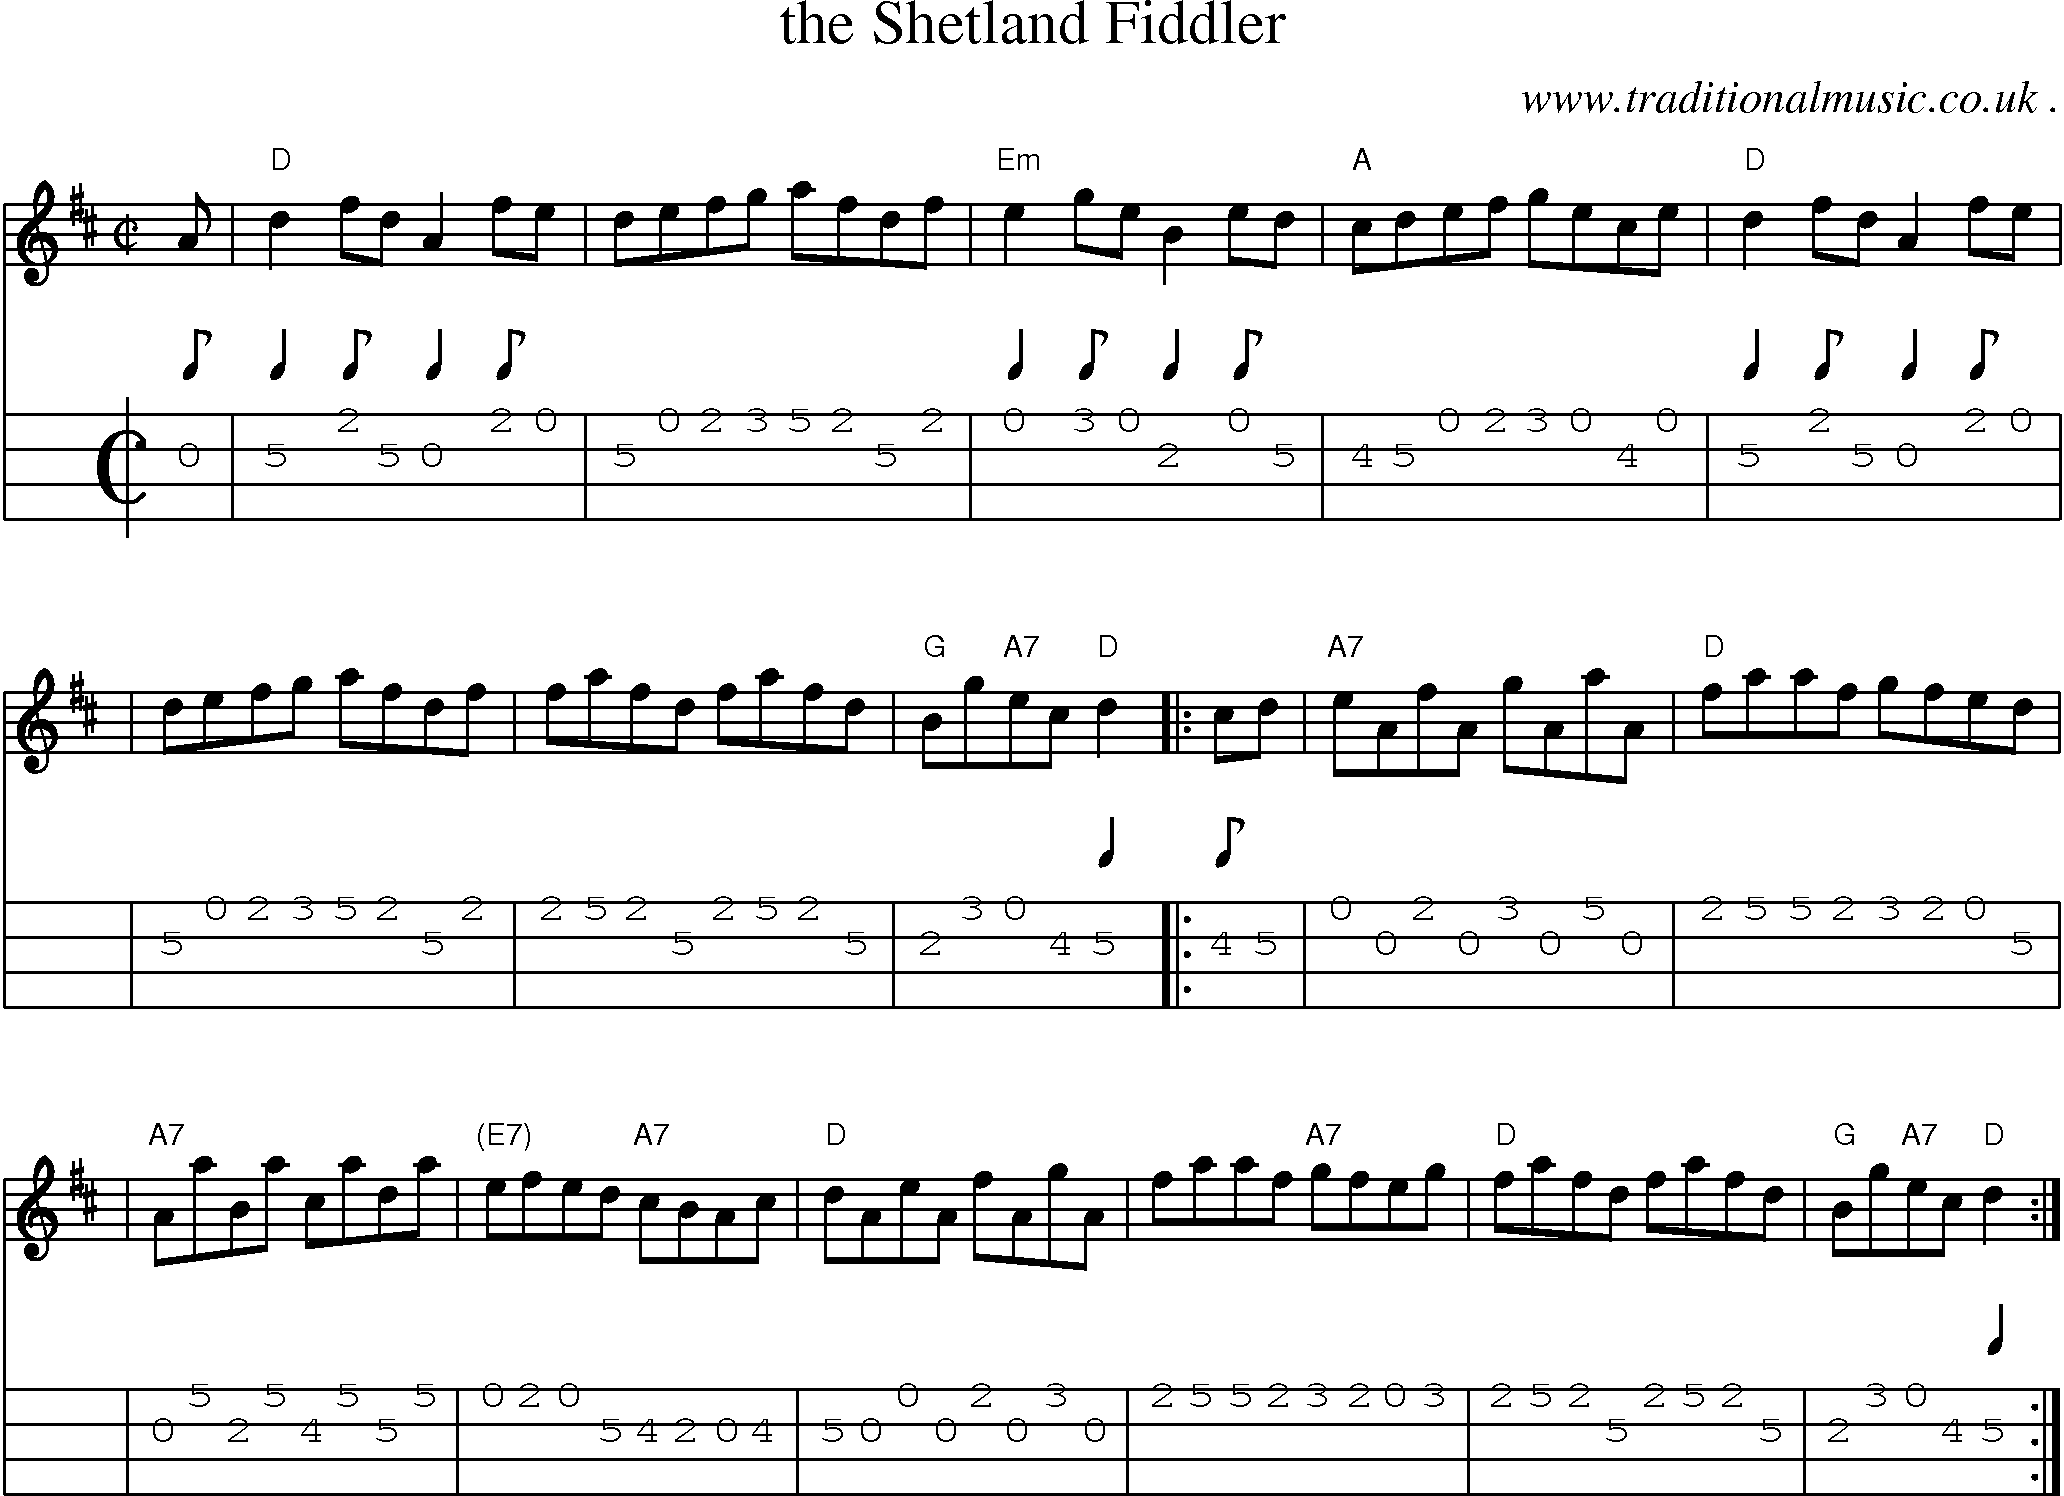 Sheet-music  score, Chords and Mandolin Tabs for The Shetland Fiddler